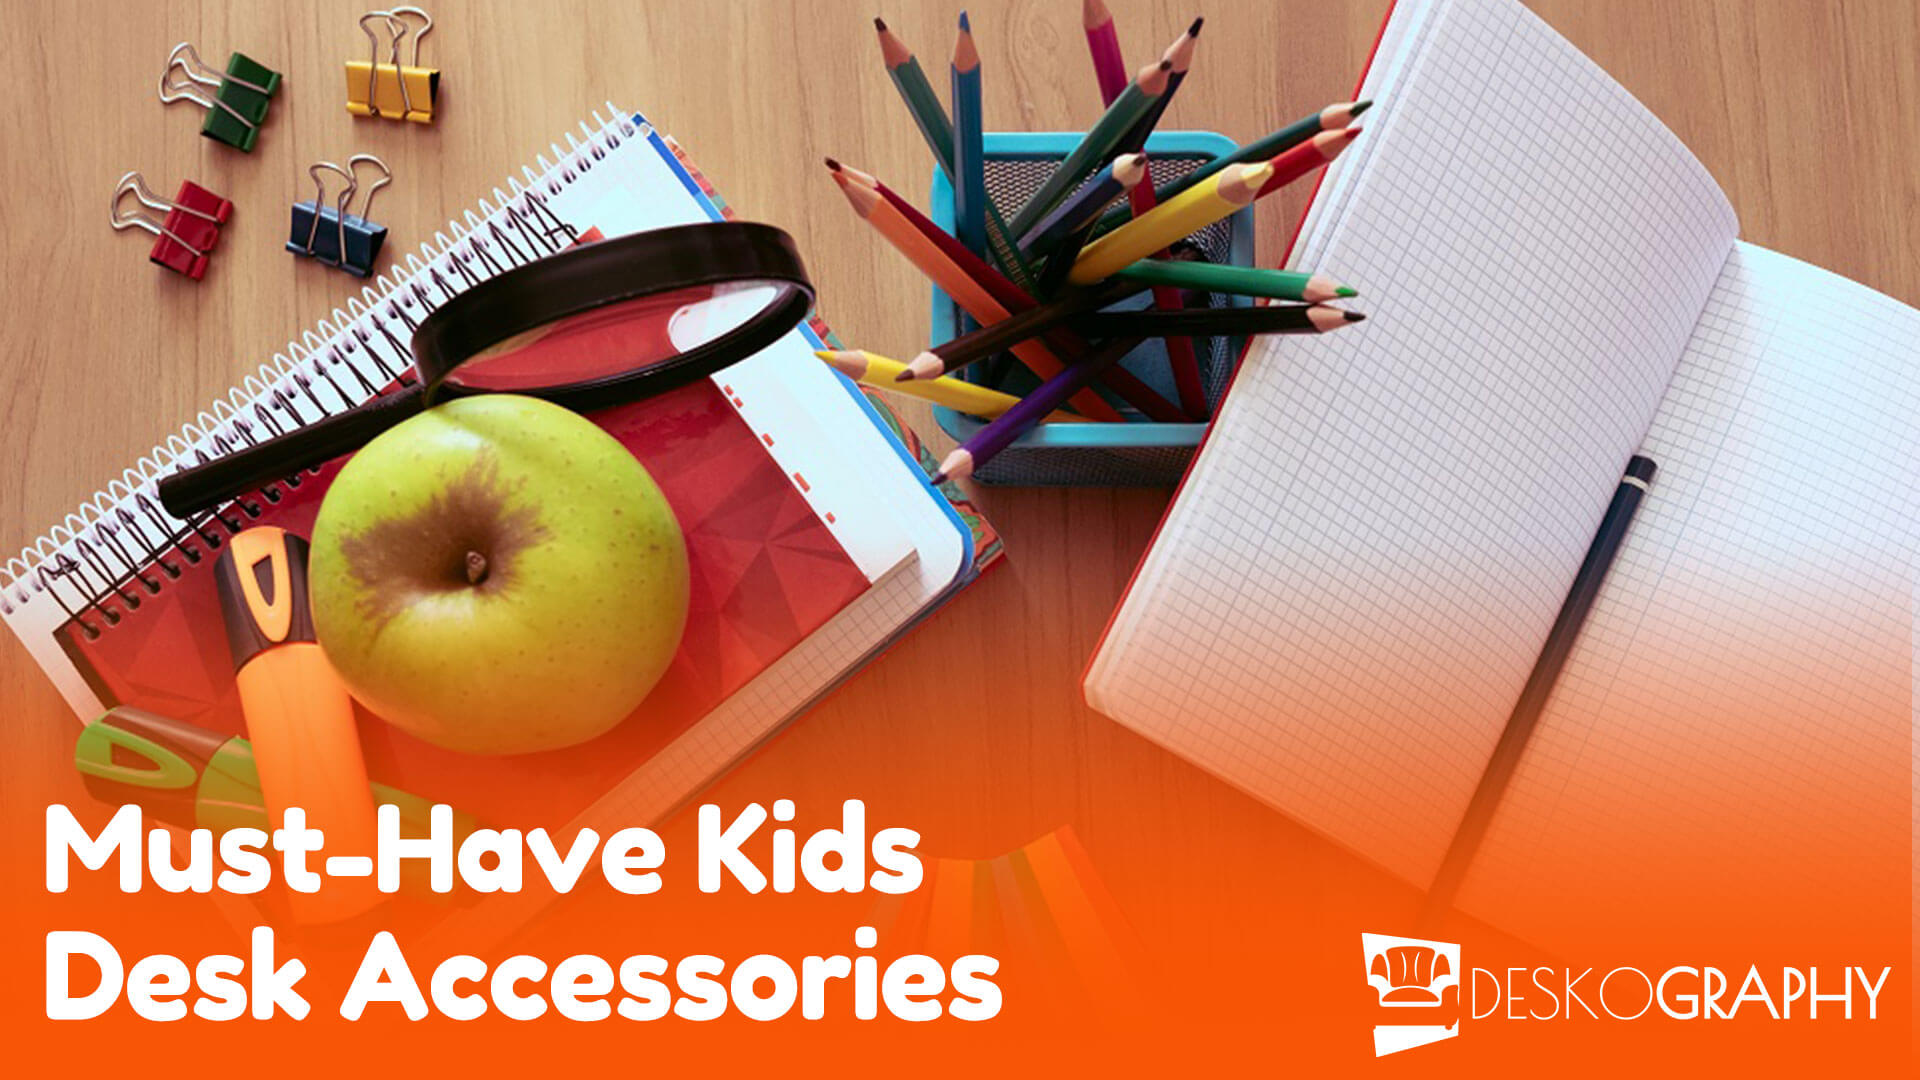 Must-Have Kids Desk Accessories